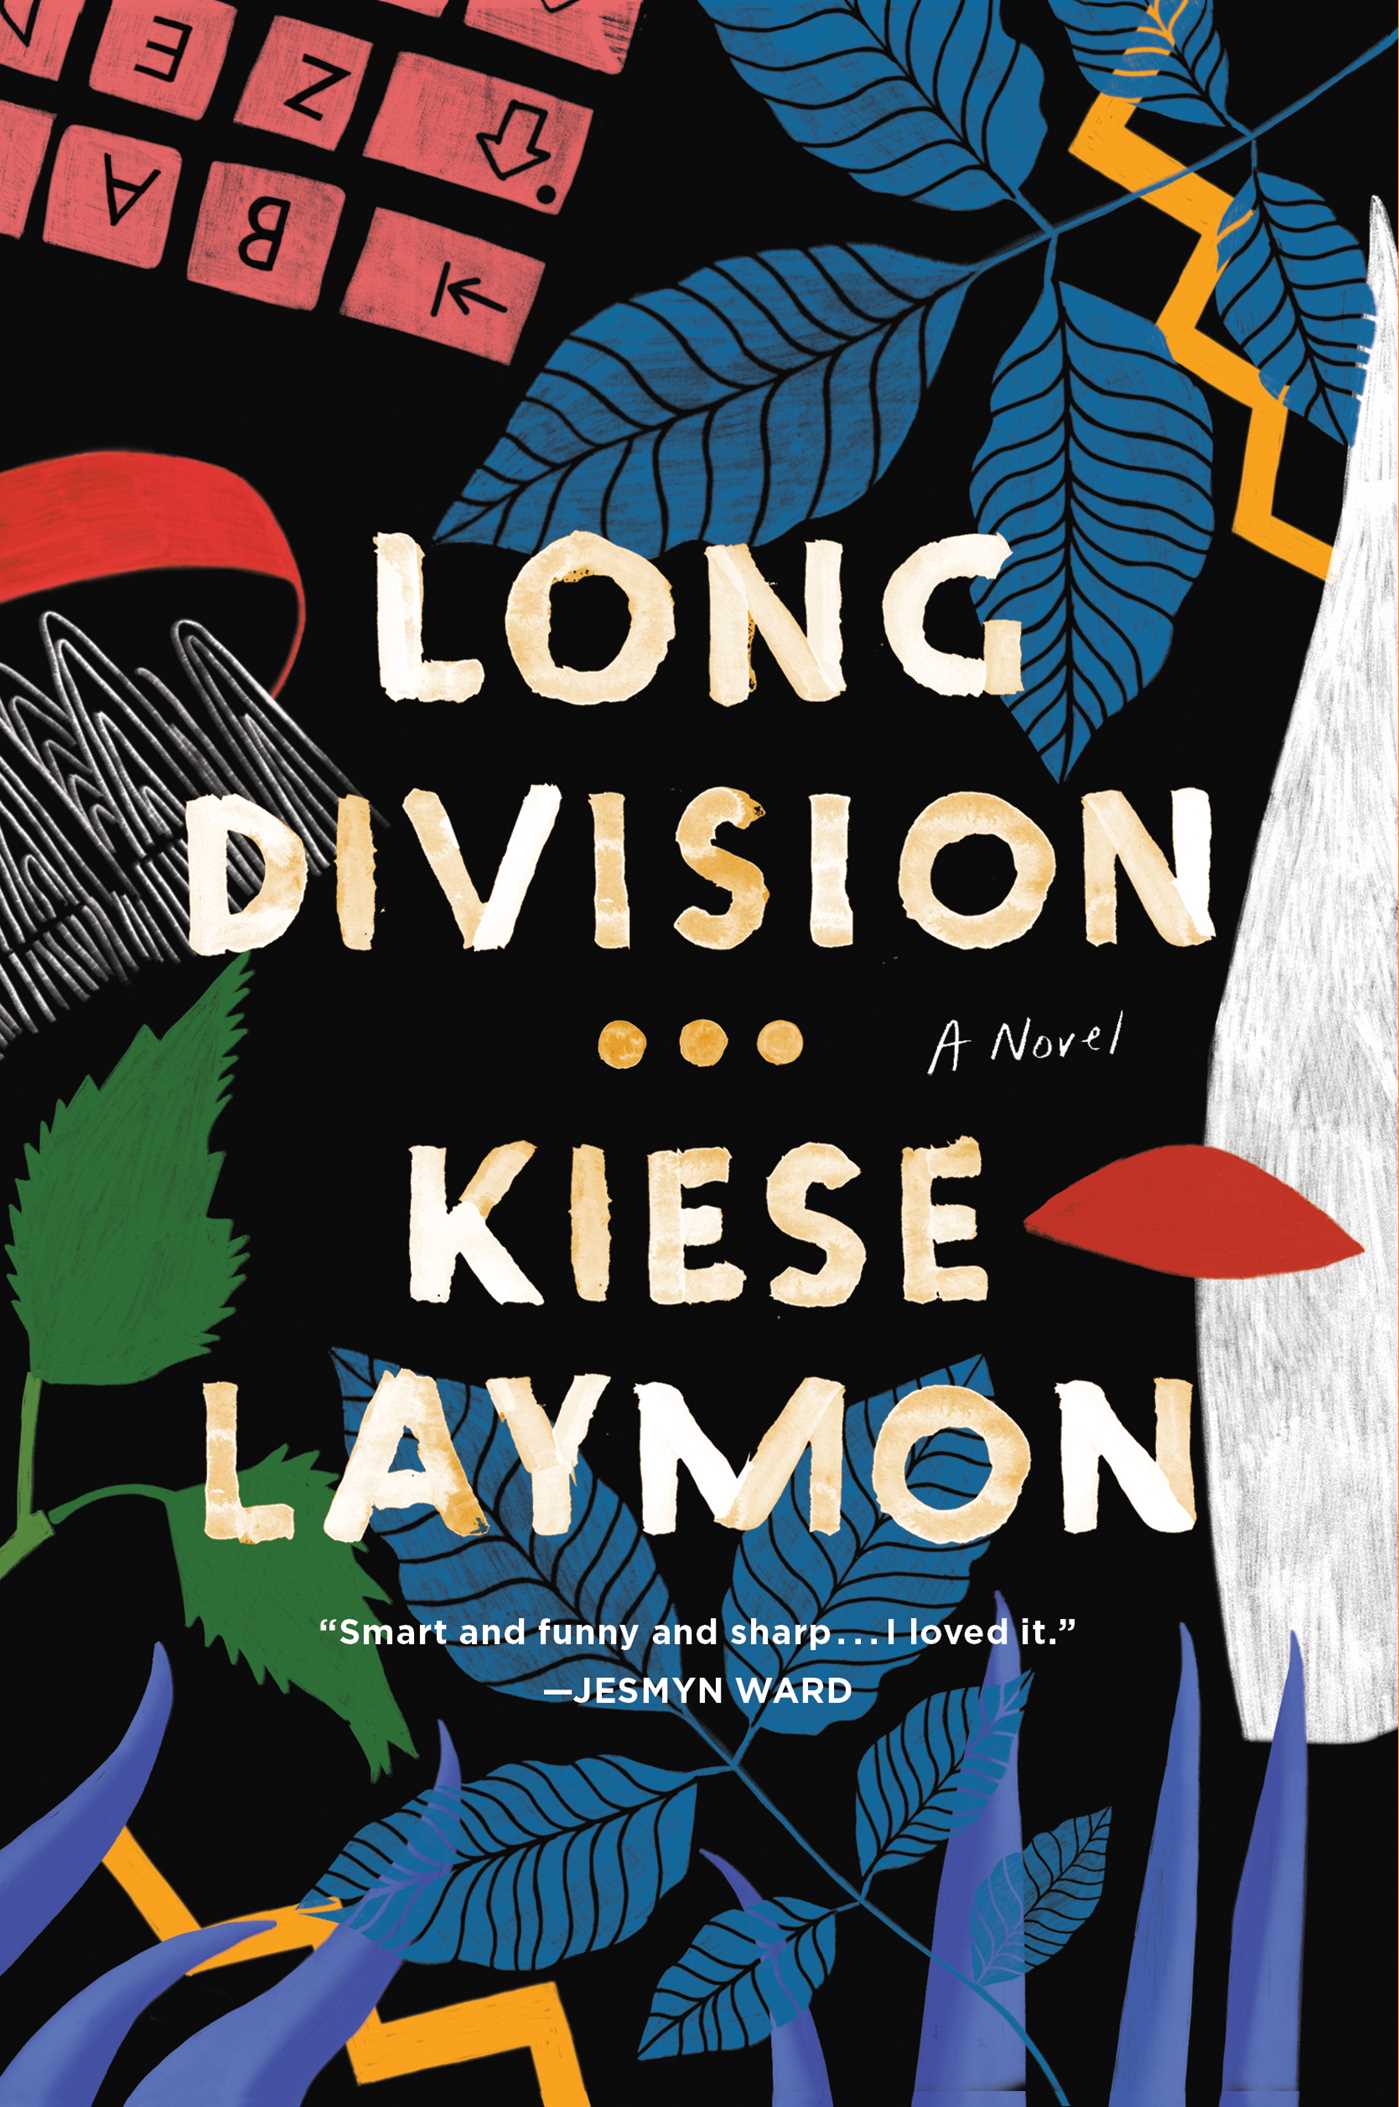 Long Division by Kiese Laymon.